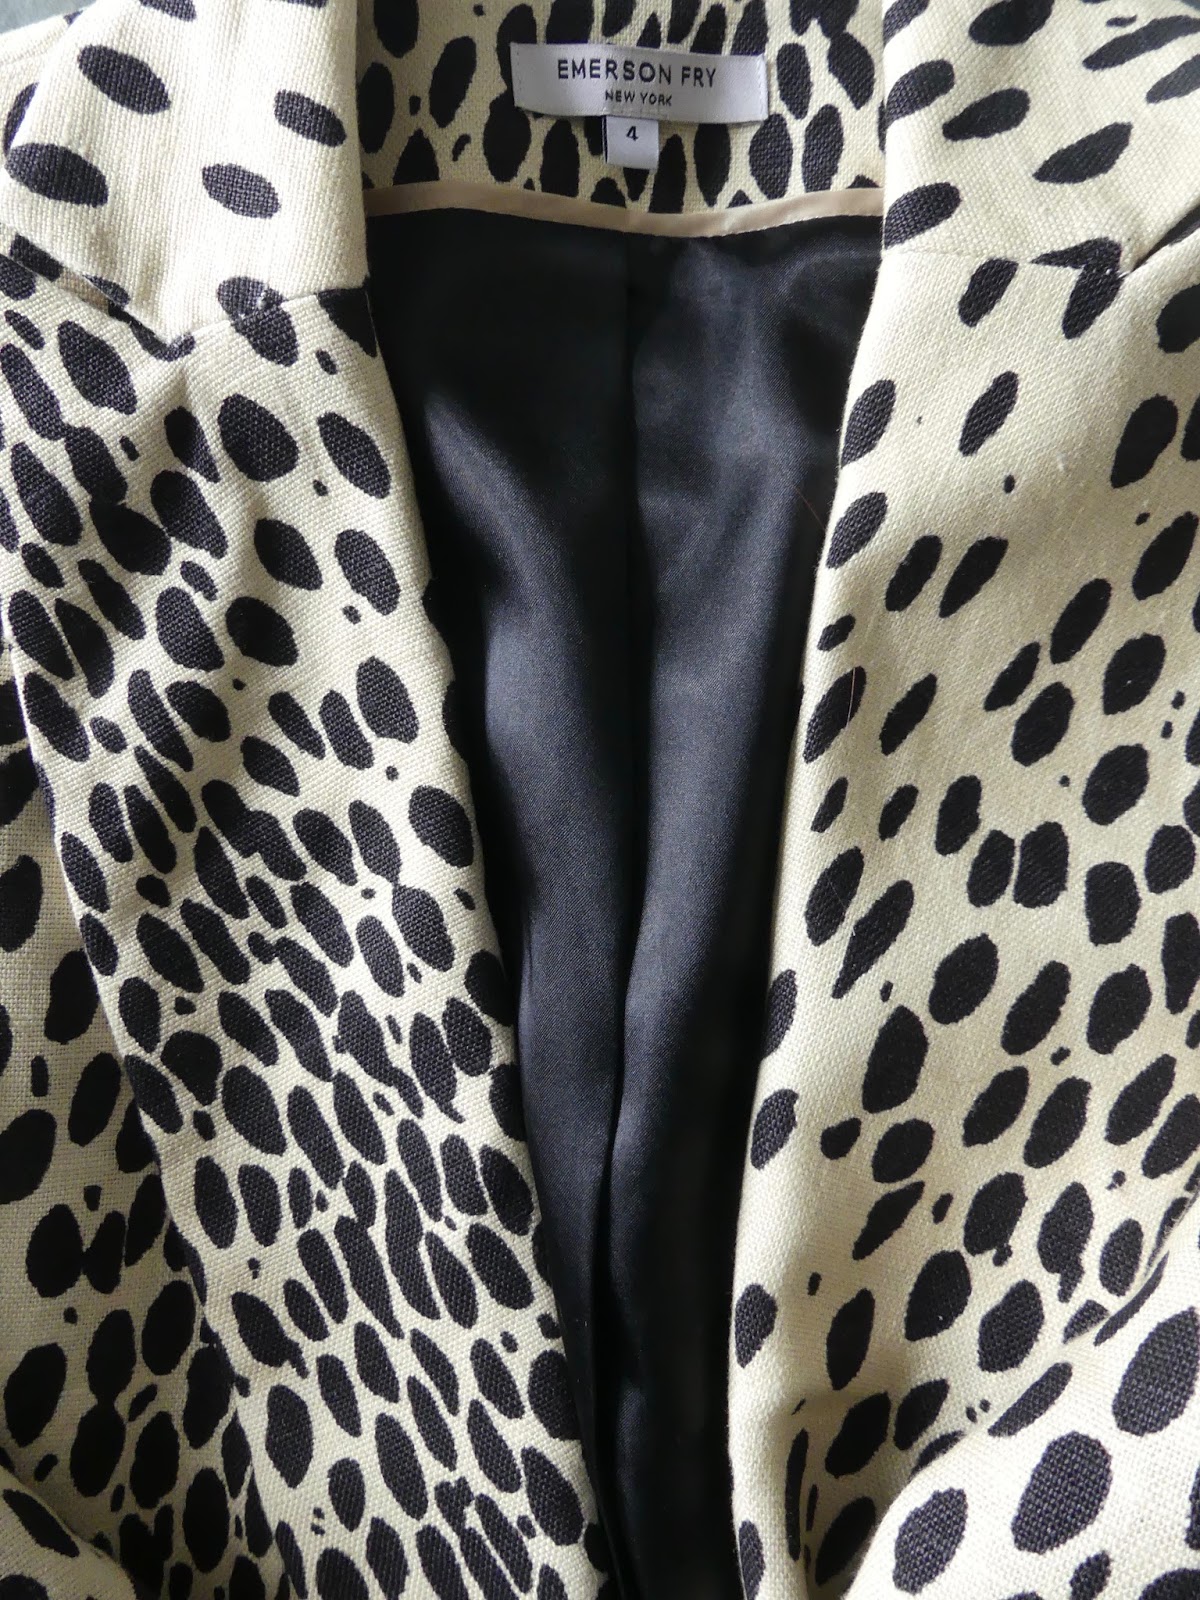 Mop Philosophy: Emerson Fry Leopard Coat